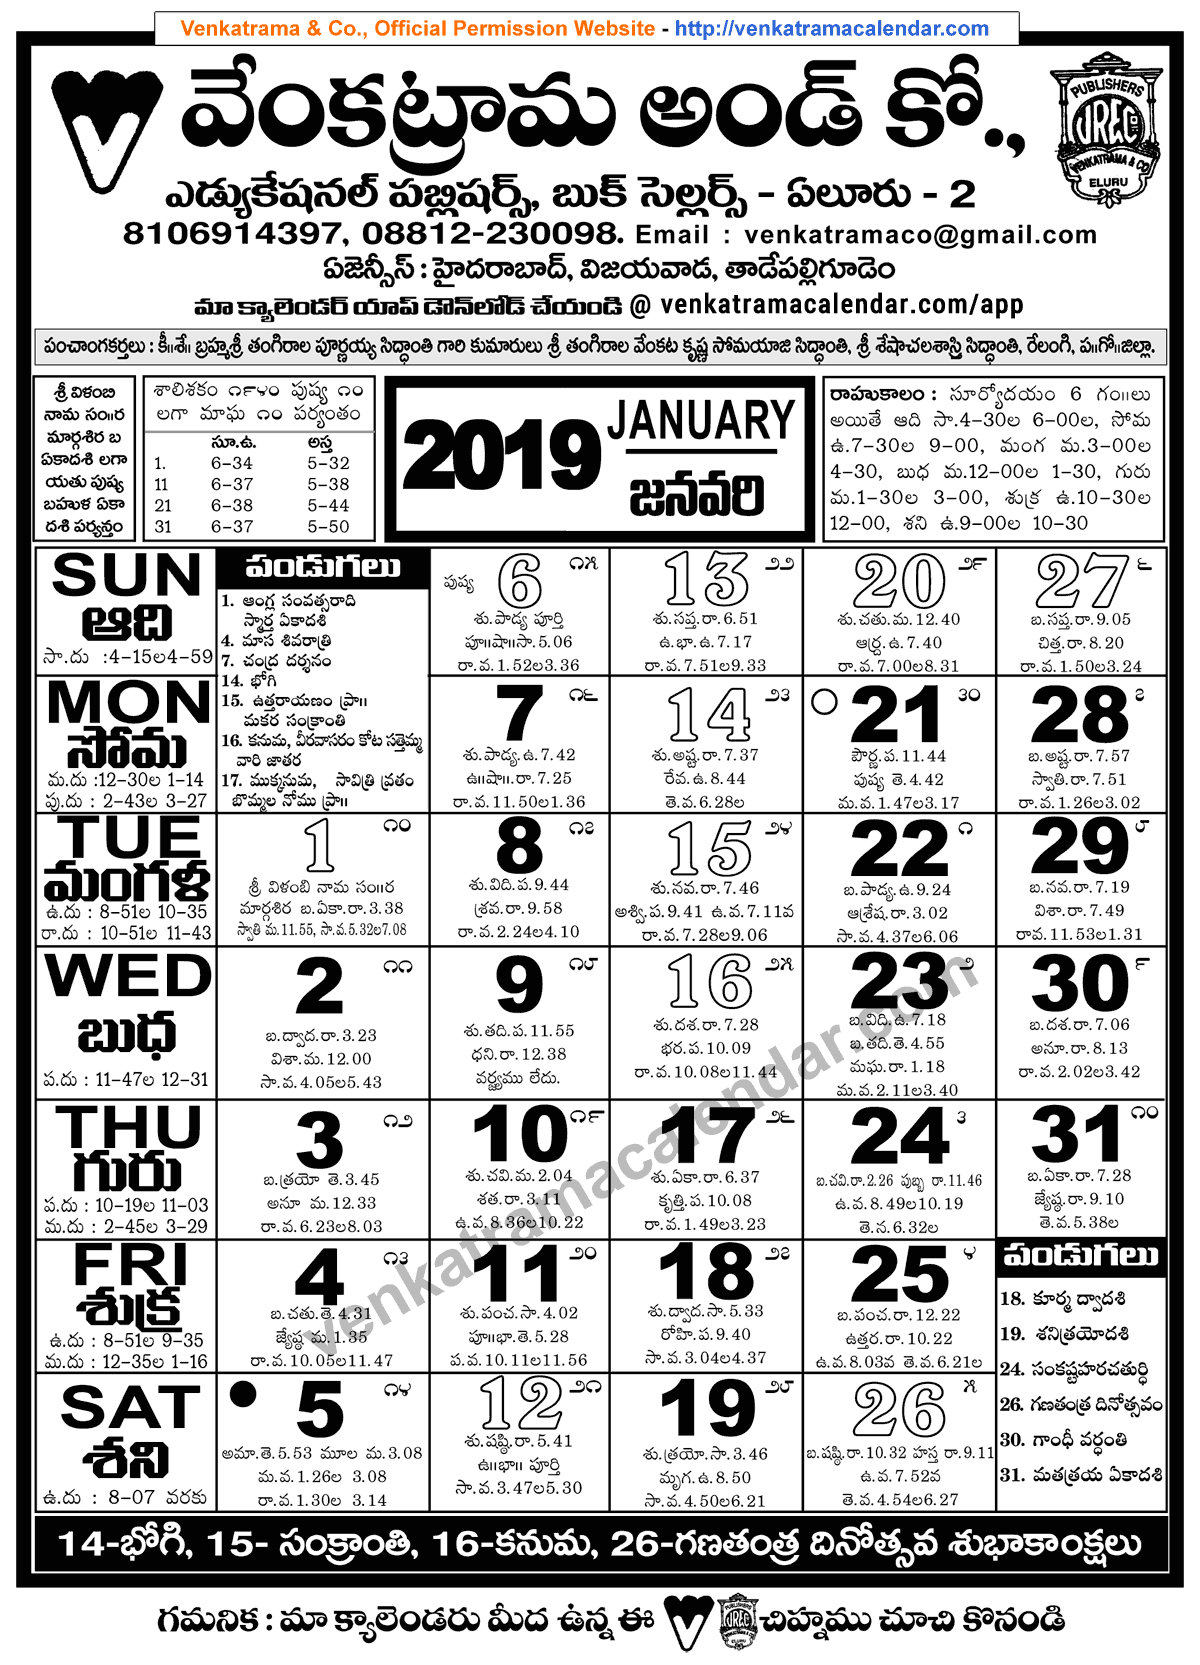 venkatrama-co-2019-january-telugu-calendar